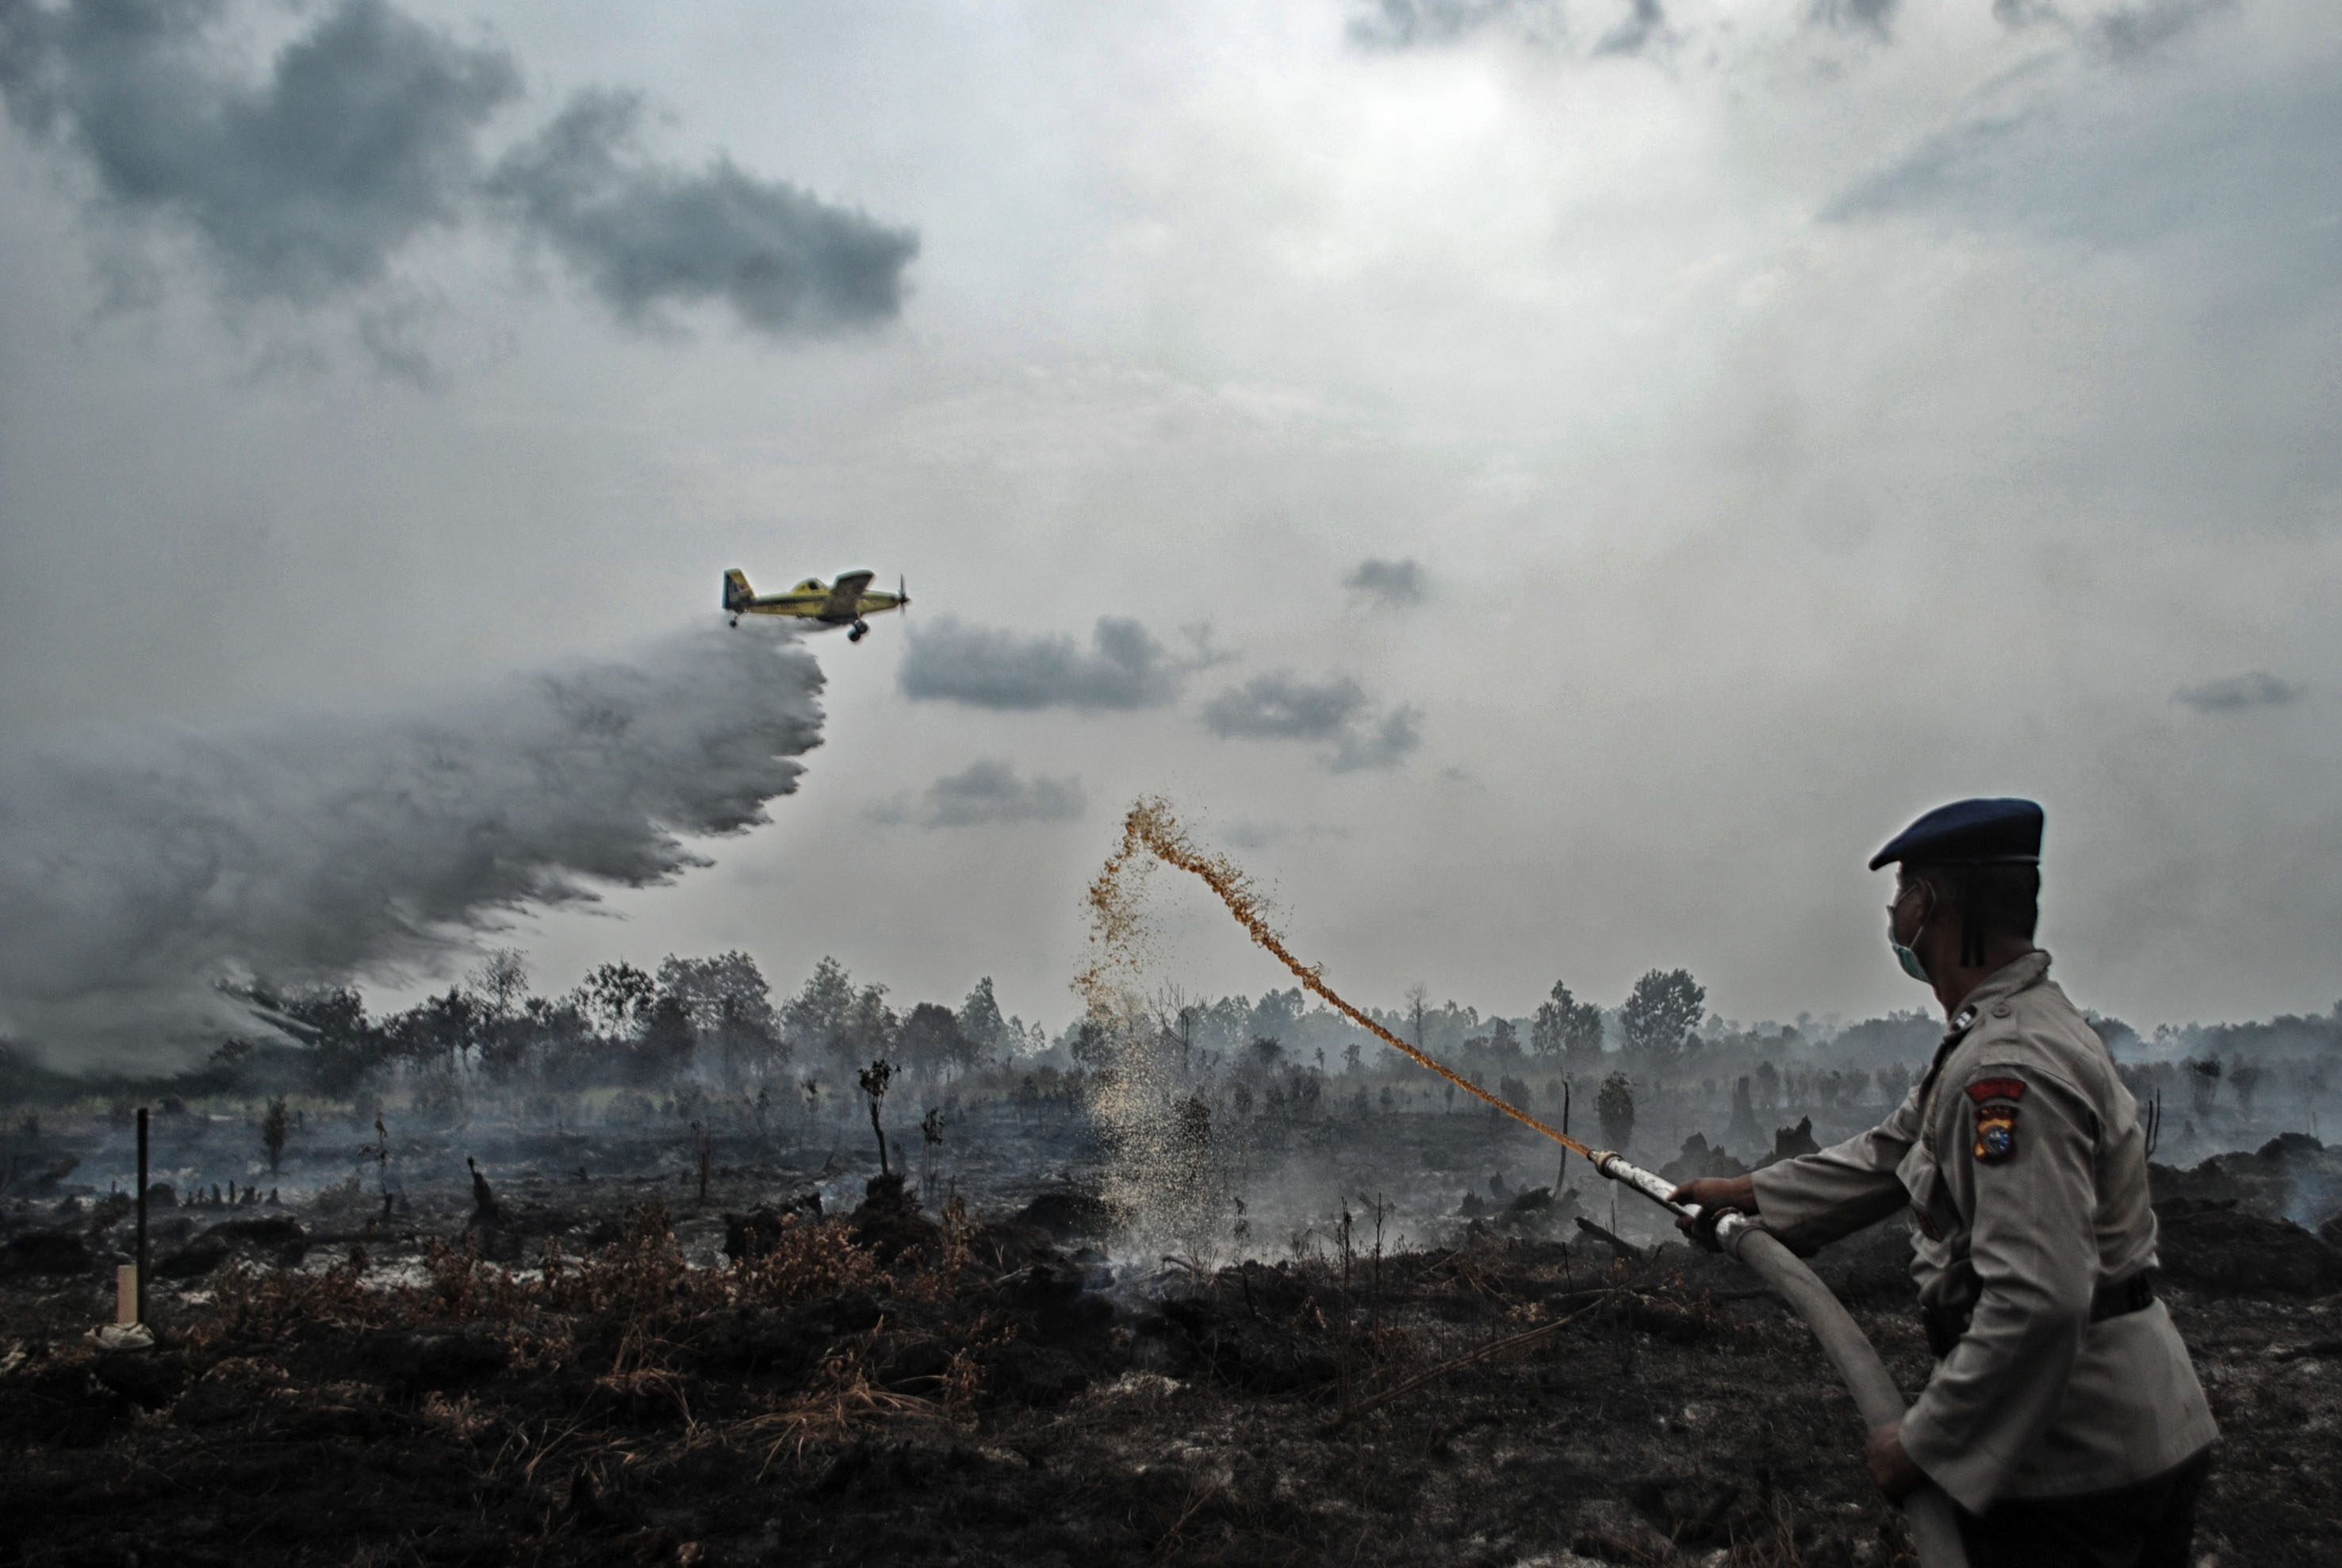 Petugas Kepolisian dibantu pesawat Air Tractor BNPB melakukan pemadaman kebakaran lahan gambut yang terjadi di Desa Rimbo Panjang, Kampar, Riau, pada 29 Agustus 2016. Foto oleh Rony Muharrman/Antara 